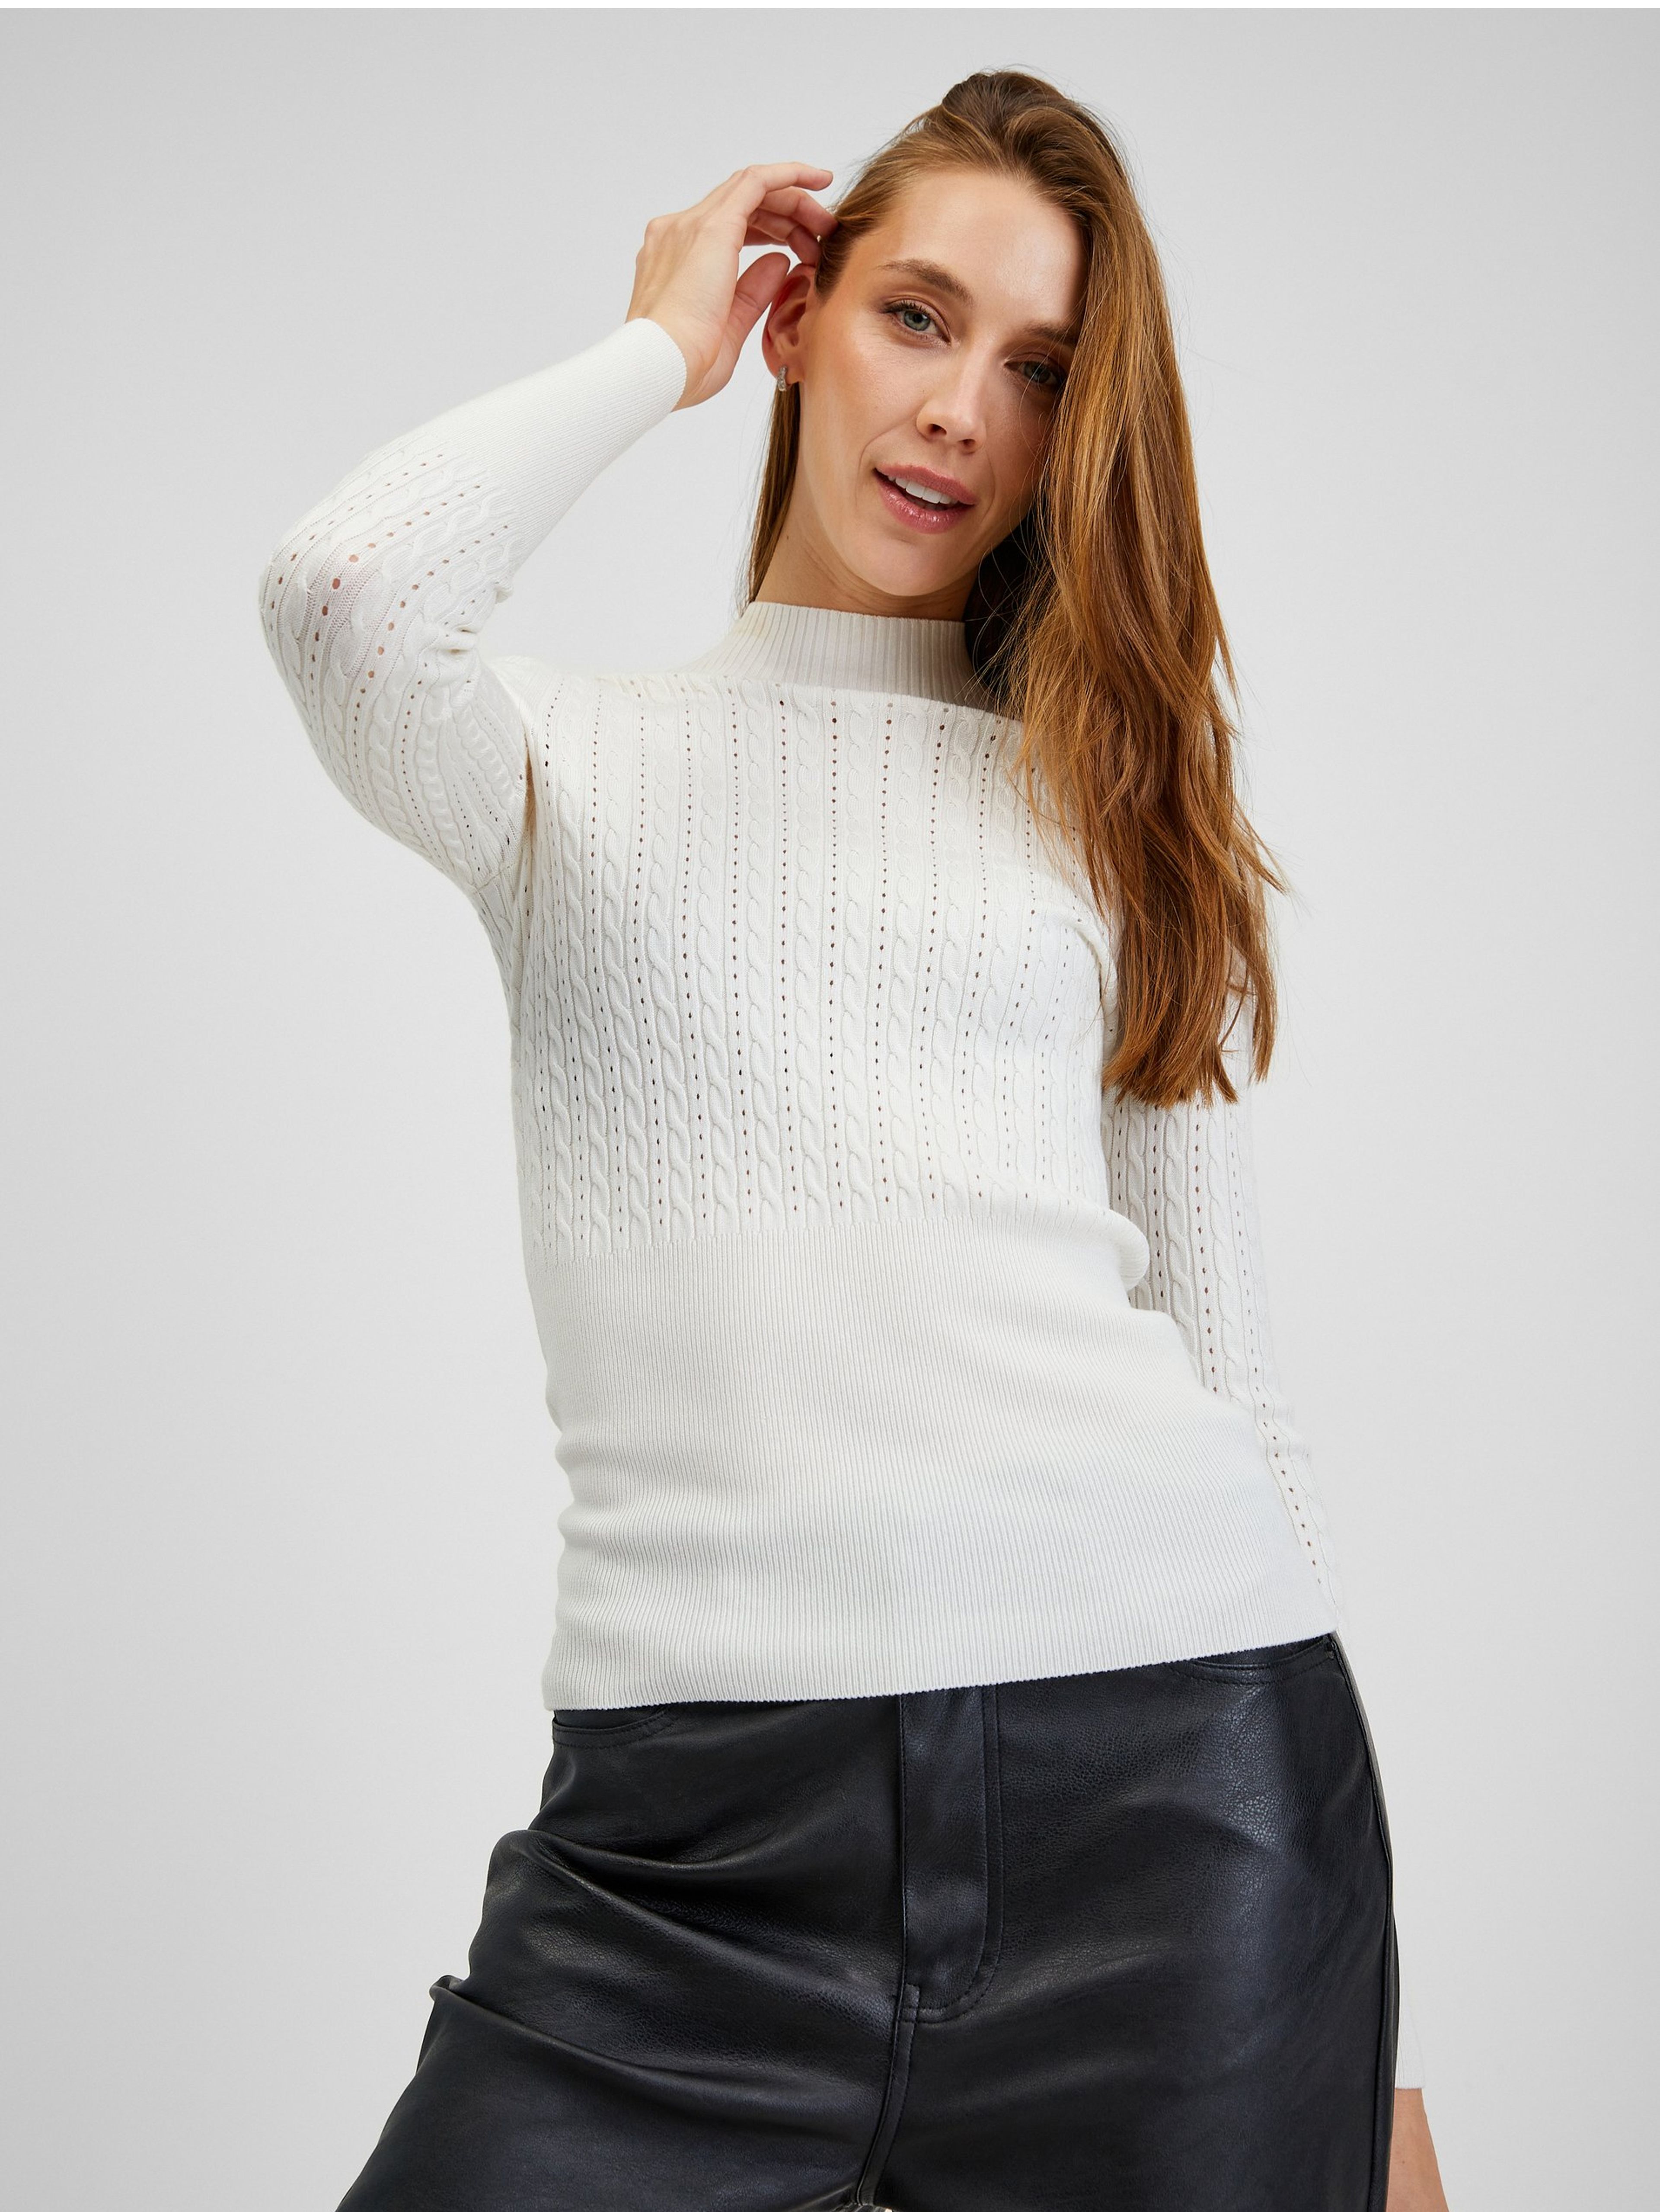 Biały sweter damski ORSAY